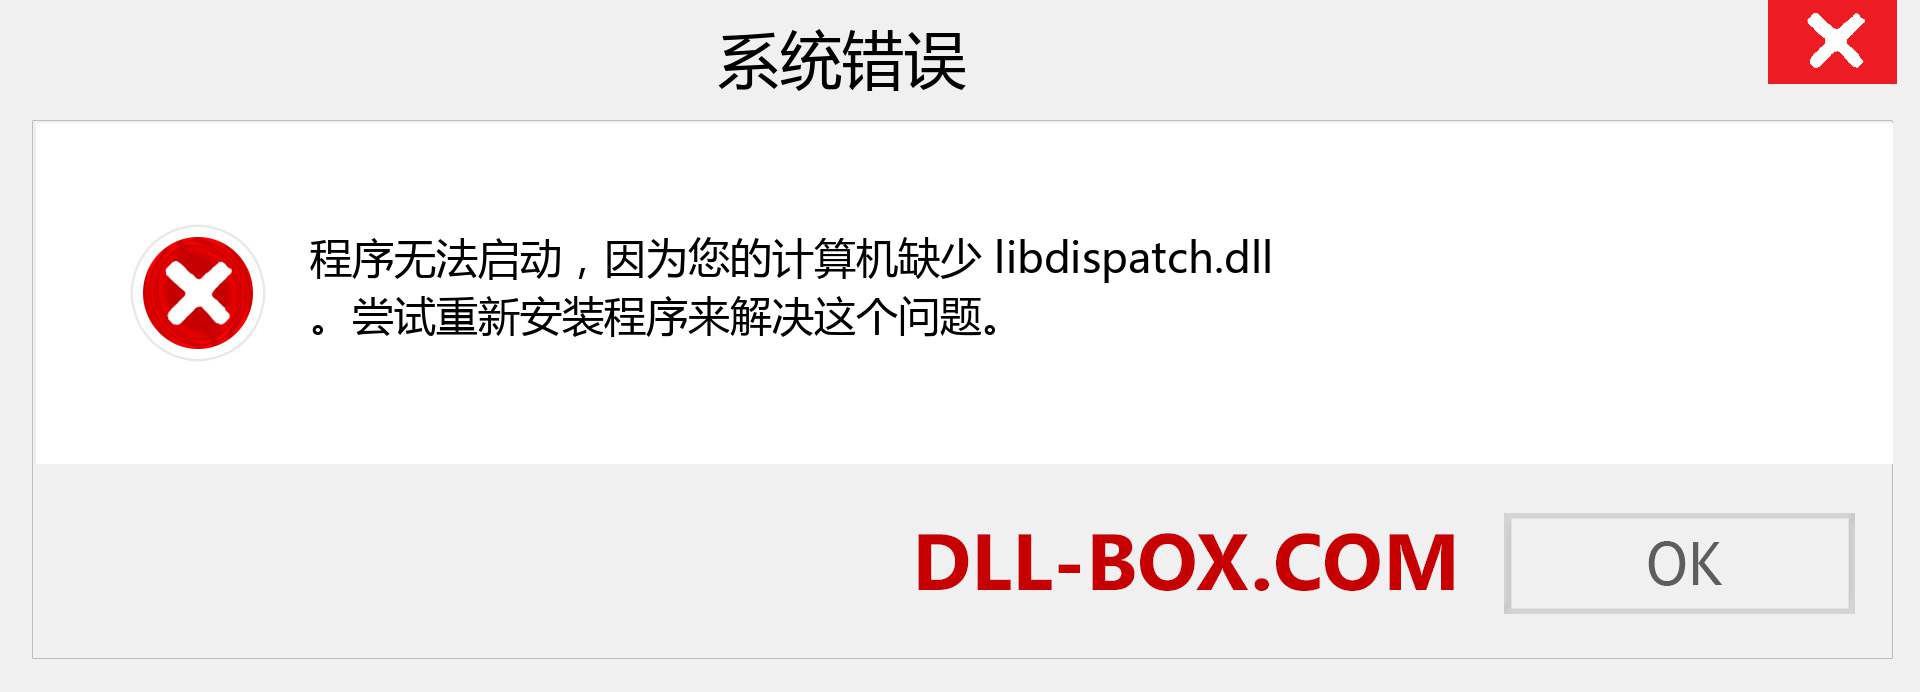 libdispatch.dll 文件丢失？。 适用于 Windows 7、8、10 的下载 - 修复 Windows、照片、图像上的 libdispatch dll 丢失错误